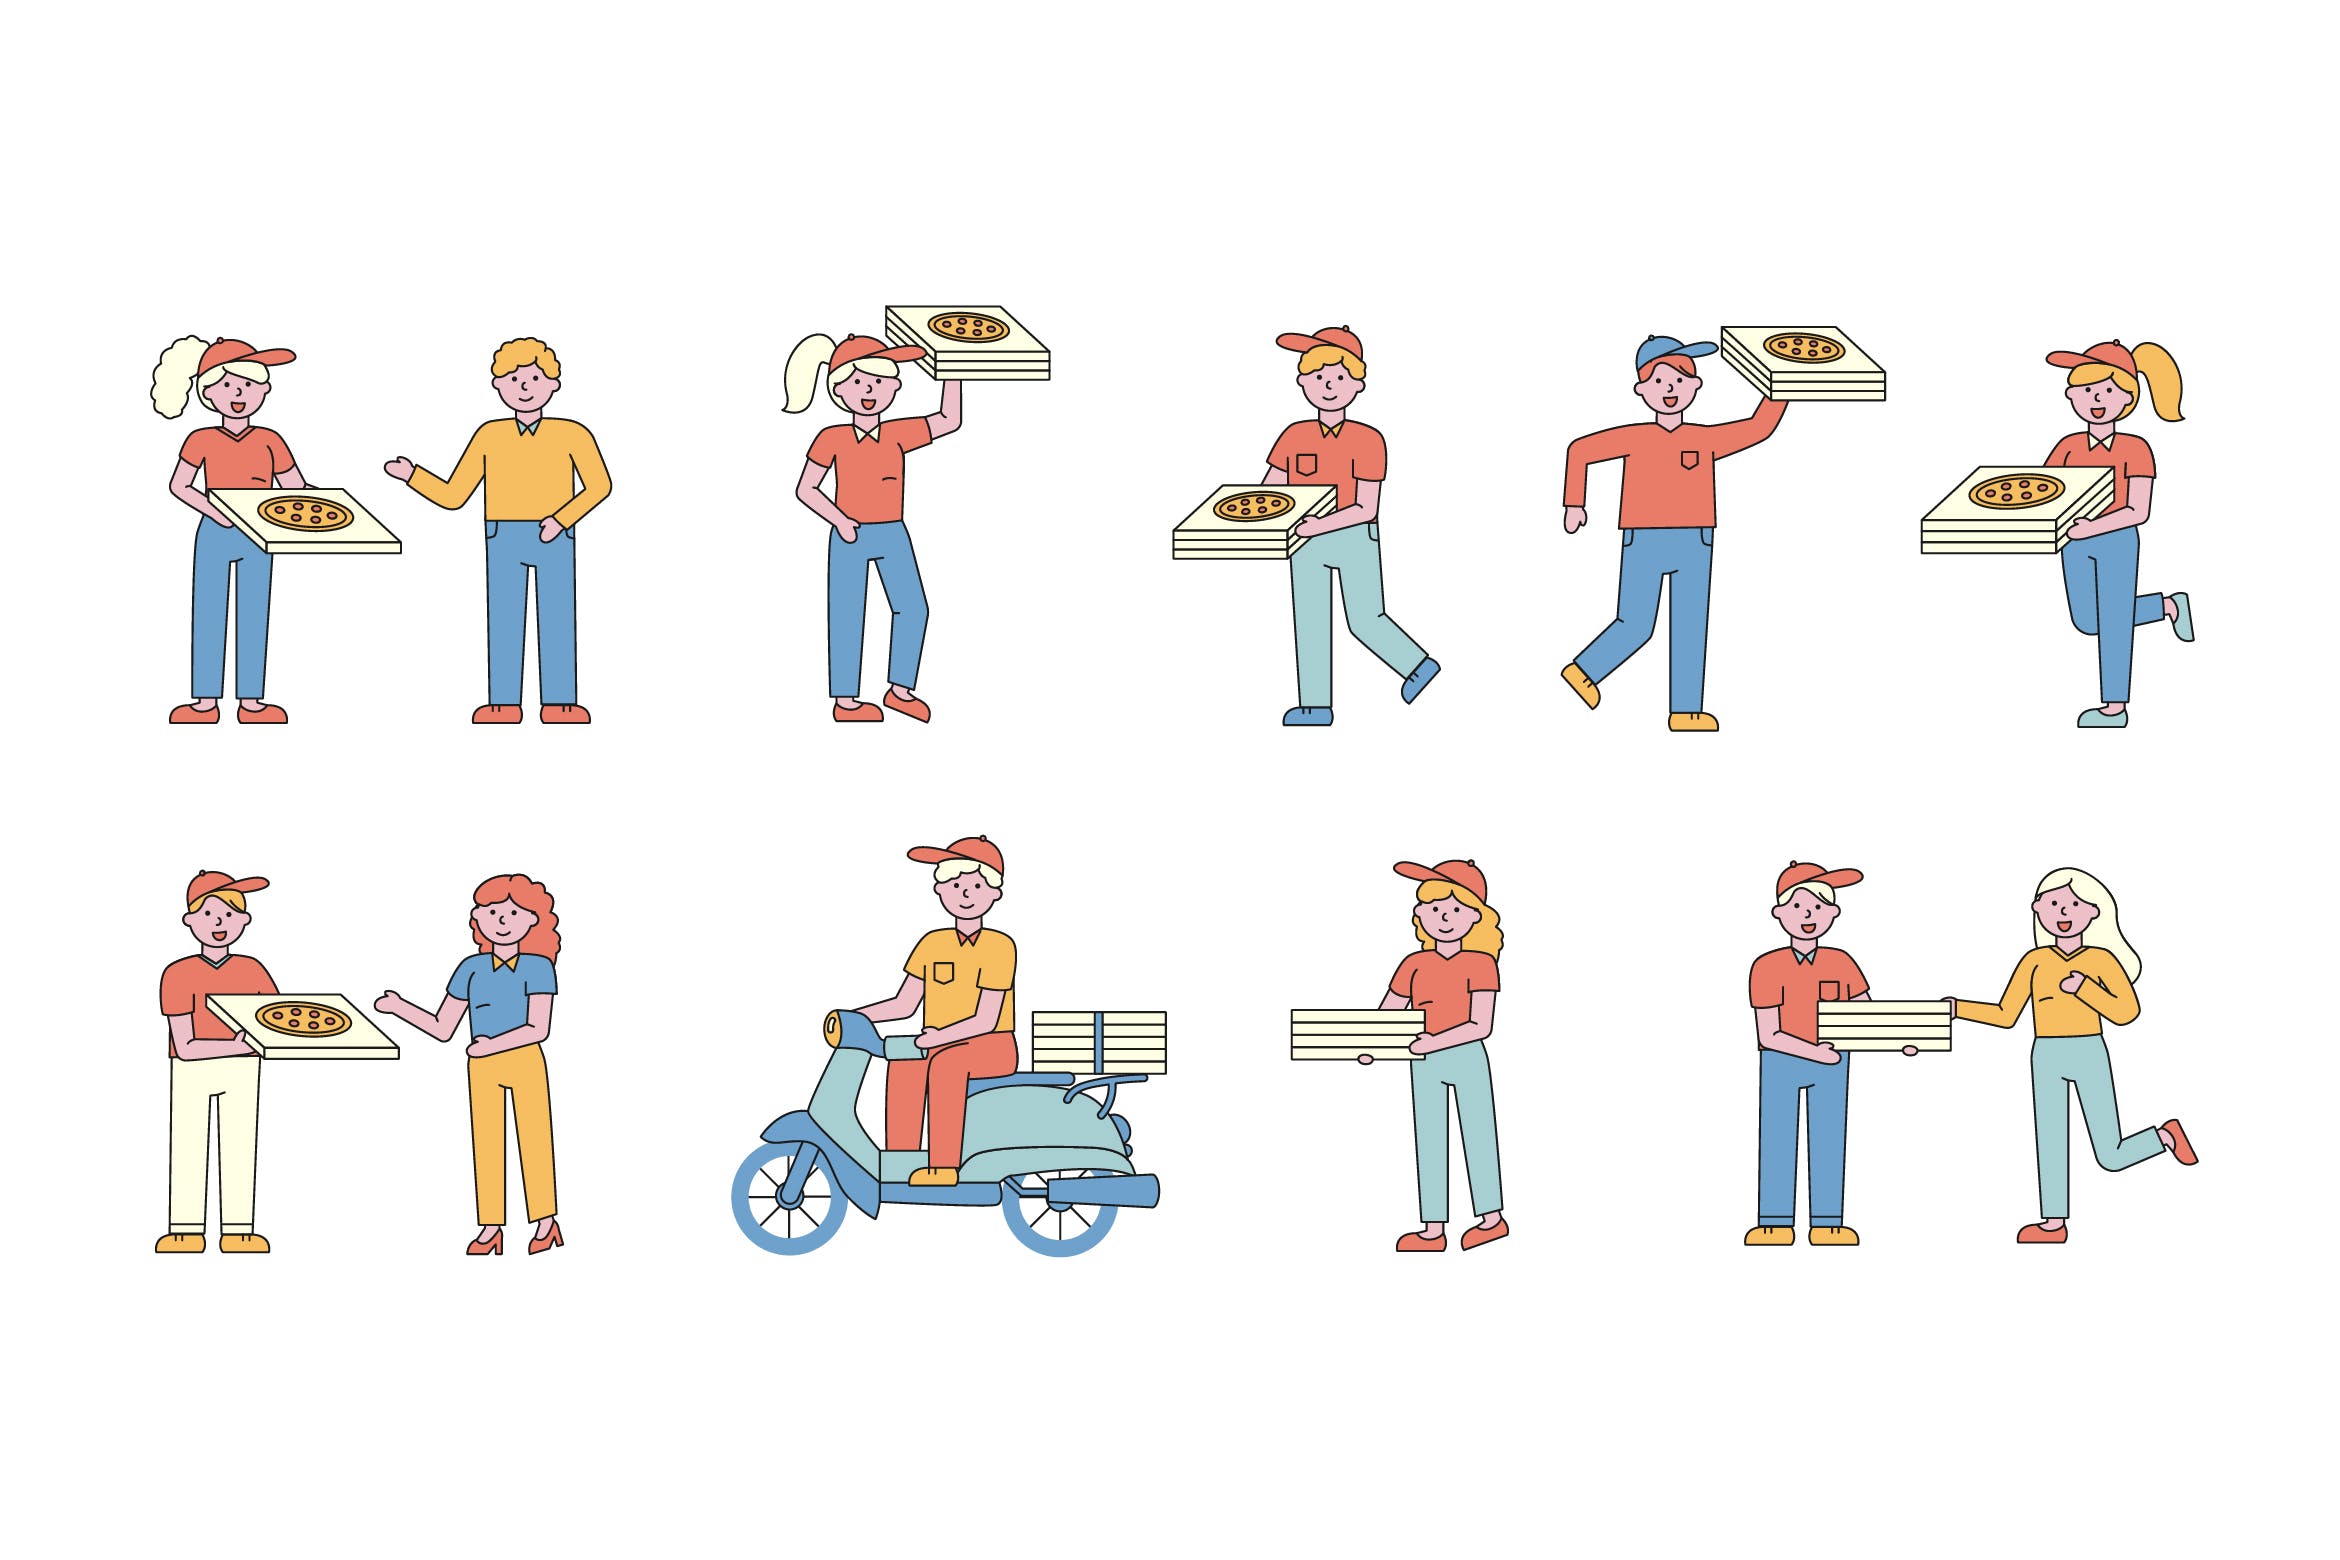 披萨送餐员人物形象线条艺术矢量插画素材中国精选素材 Pizza delivery Lineart People Character Collection插图